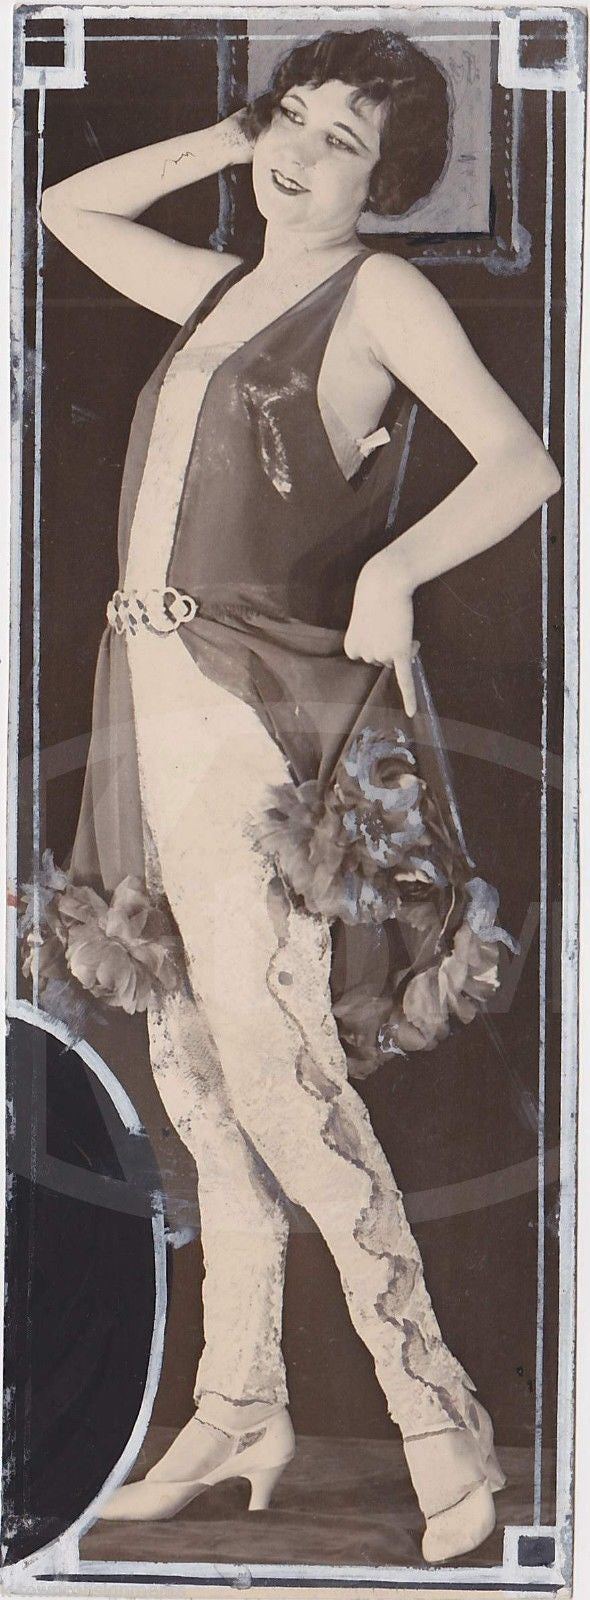 JOYCE HAWLEY VAUDEVILLE STAGE ACTRESS ANTIQUE NEWS PRESS PHOTO 1926 - K-townConsignments